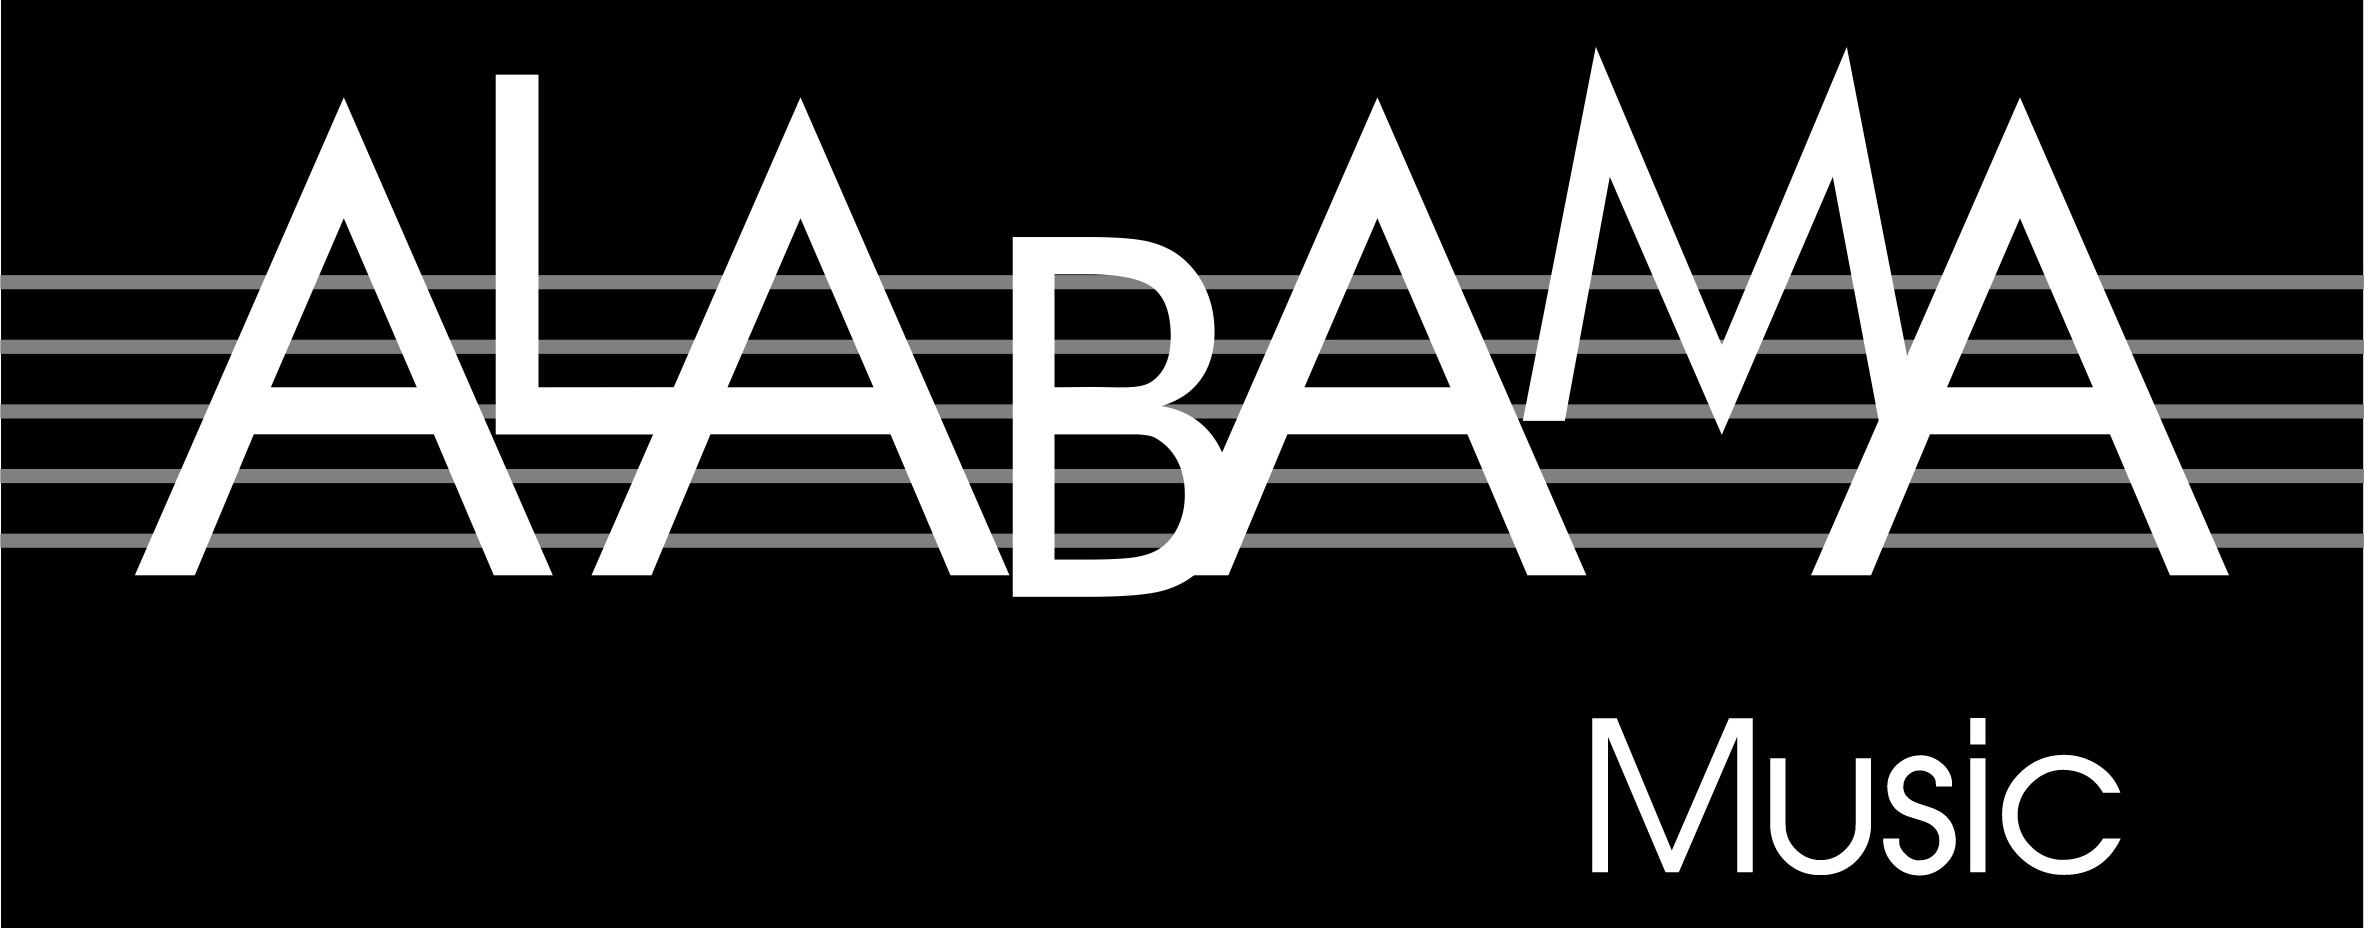 Alabama Music